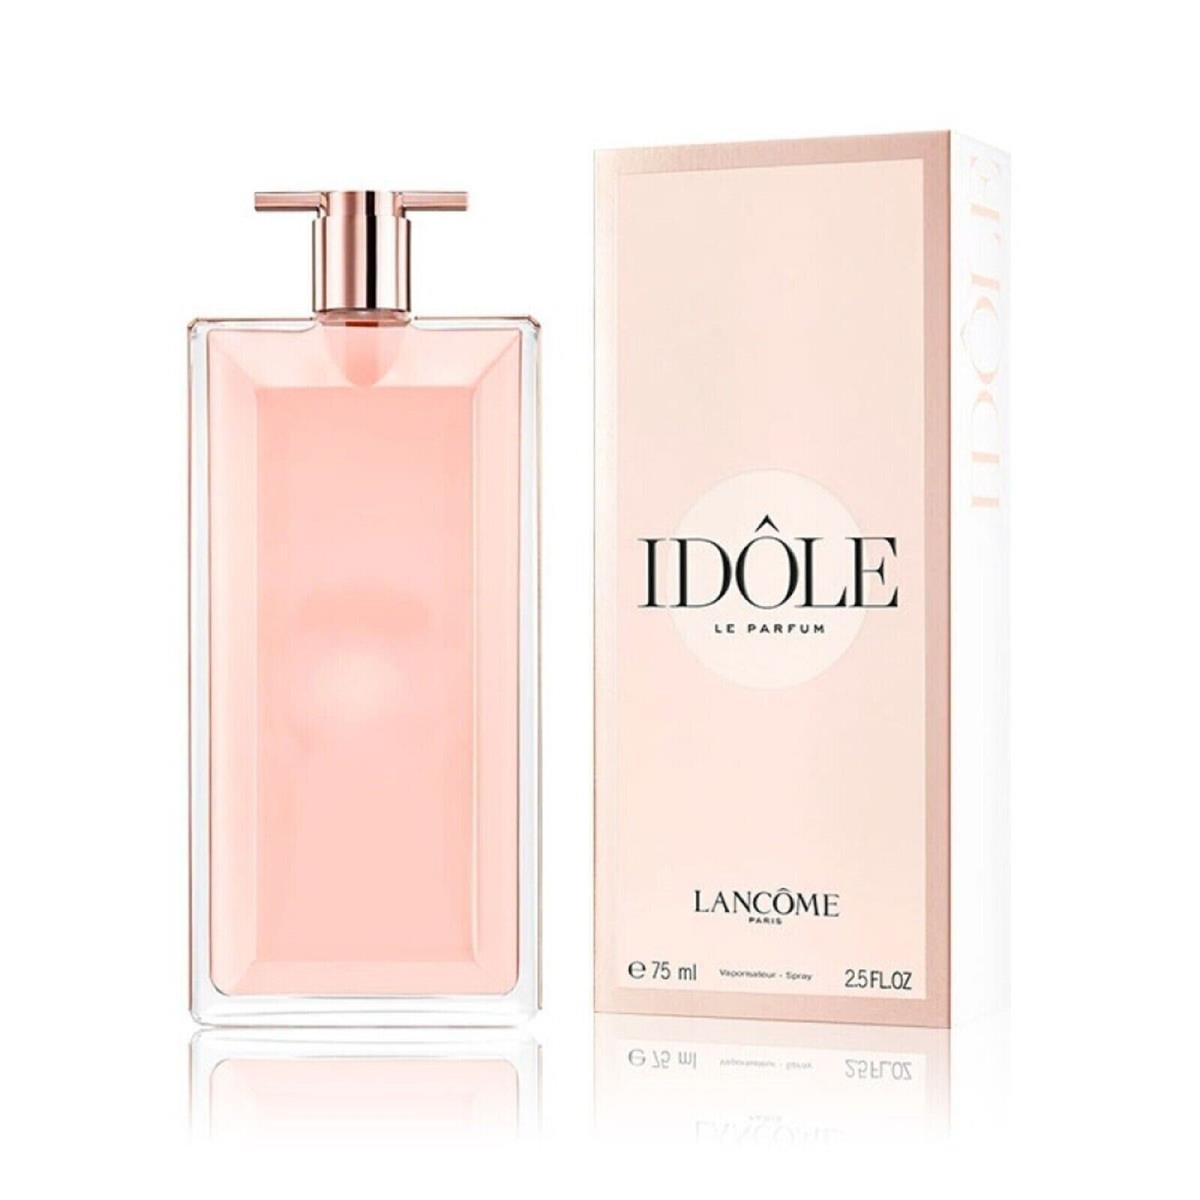 Idole by Lancome Eau de Parfum Edp Perfume For Women 2.5 oz